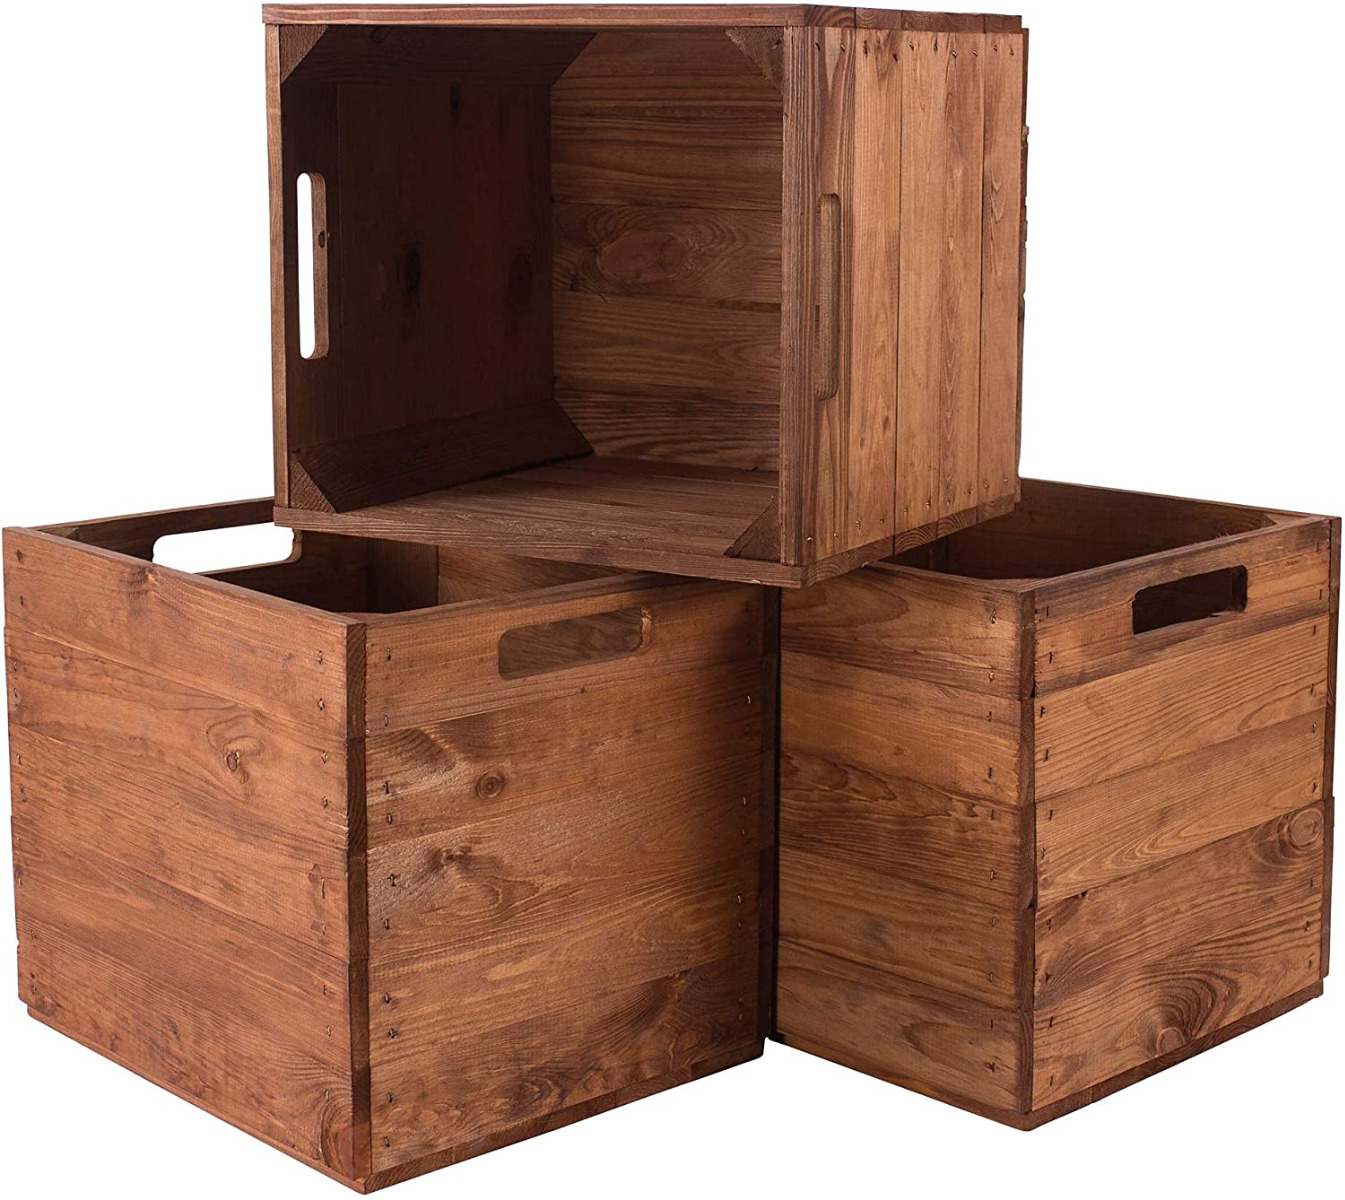 Over instelling Vervuild Verzoekschrift Houten kistje kopen? Online het grootste assortiment houten kistjes | De  Kisten Koning